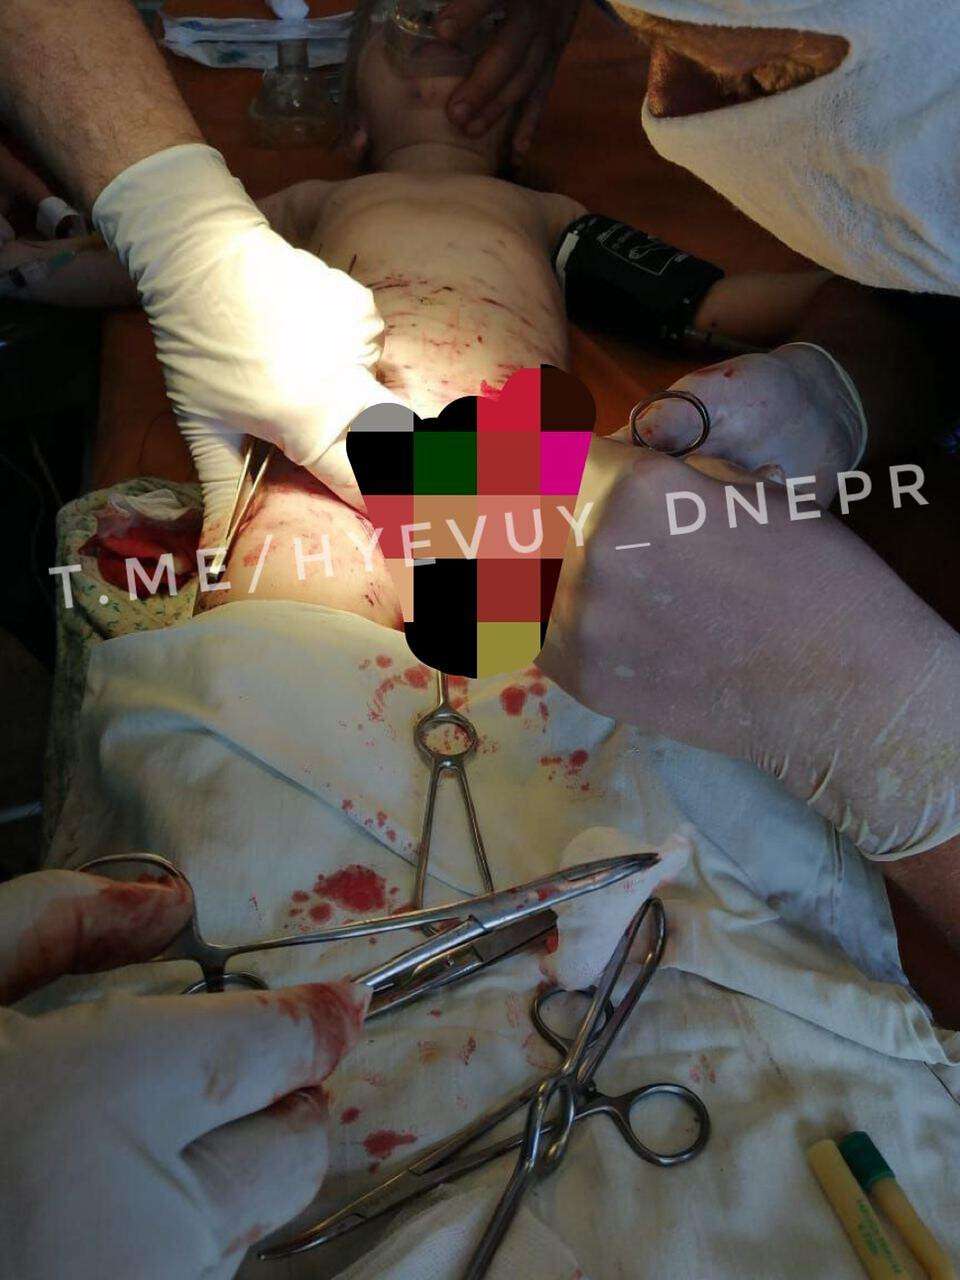 В Днепр привезли ребенка с откушенными гениталиями: фото 18+